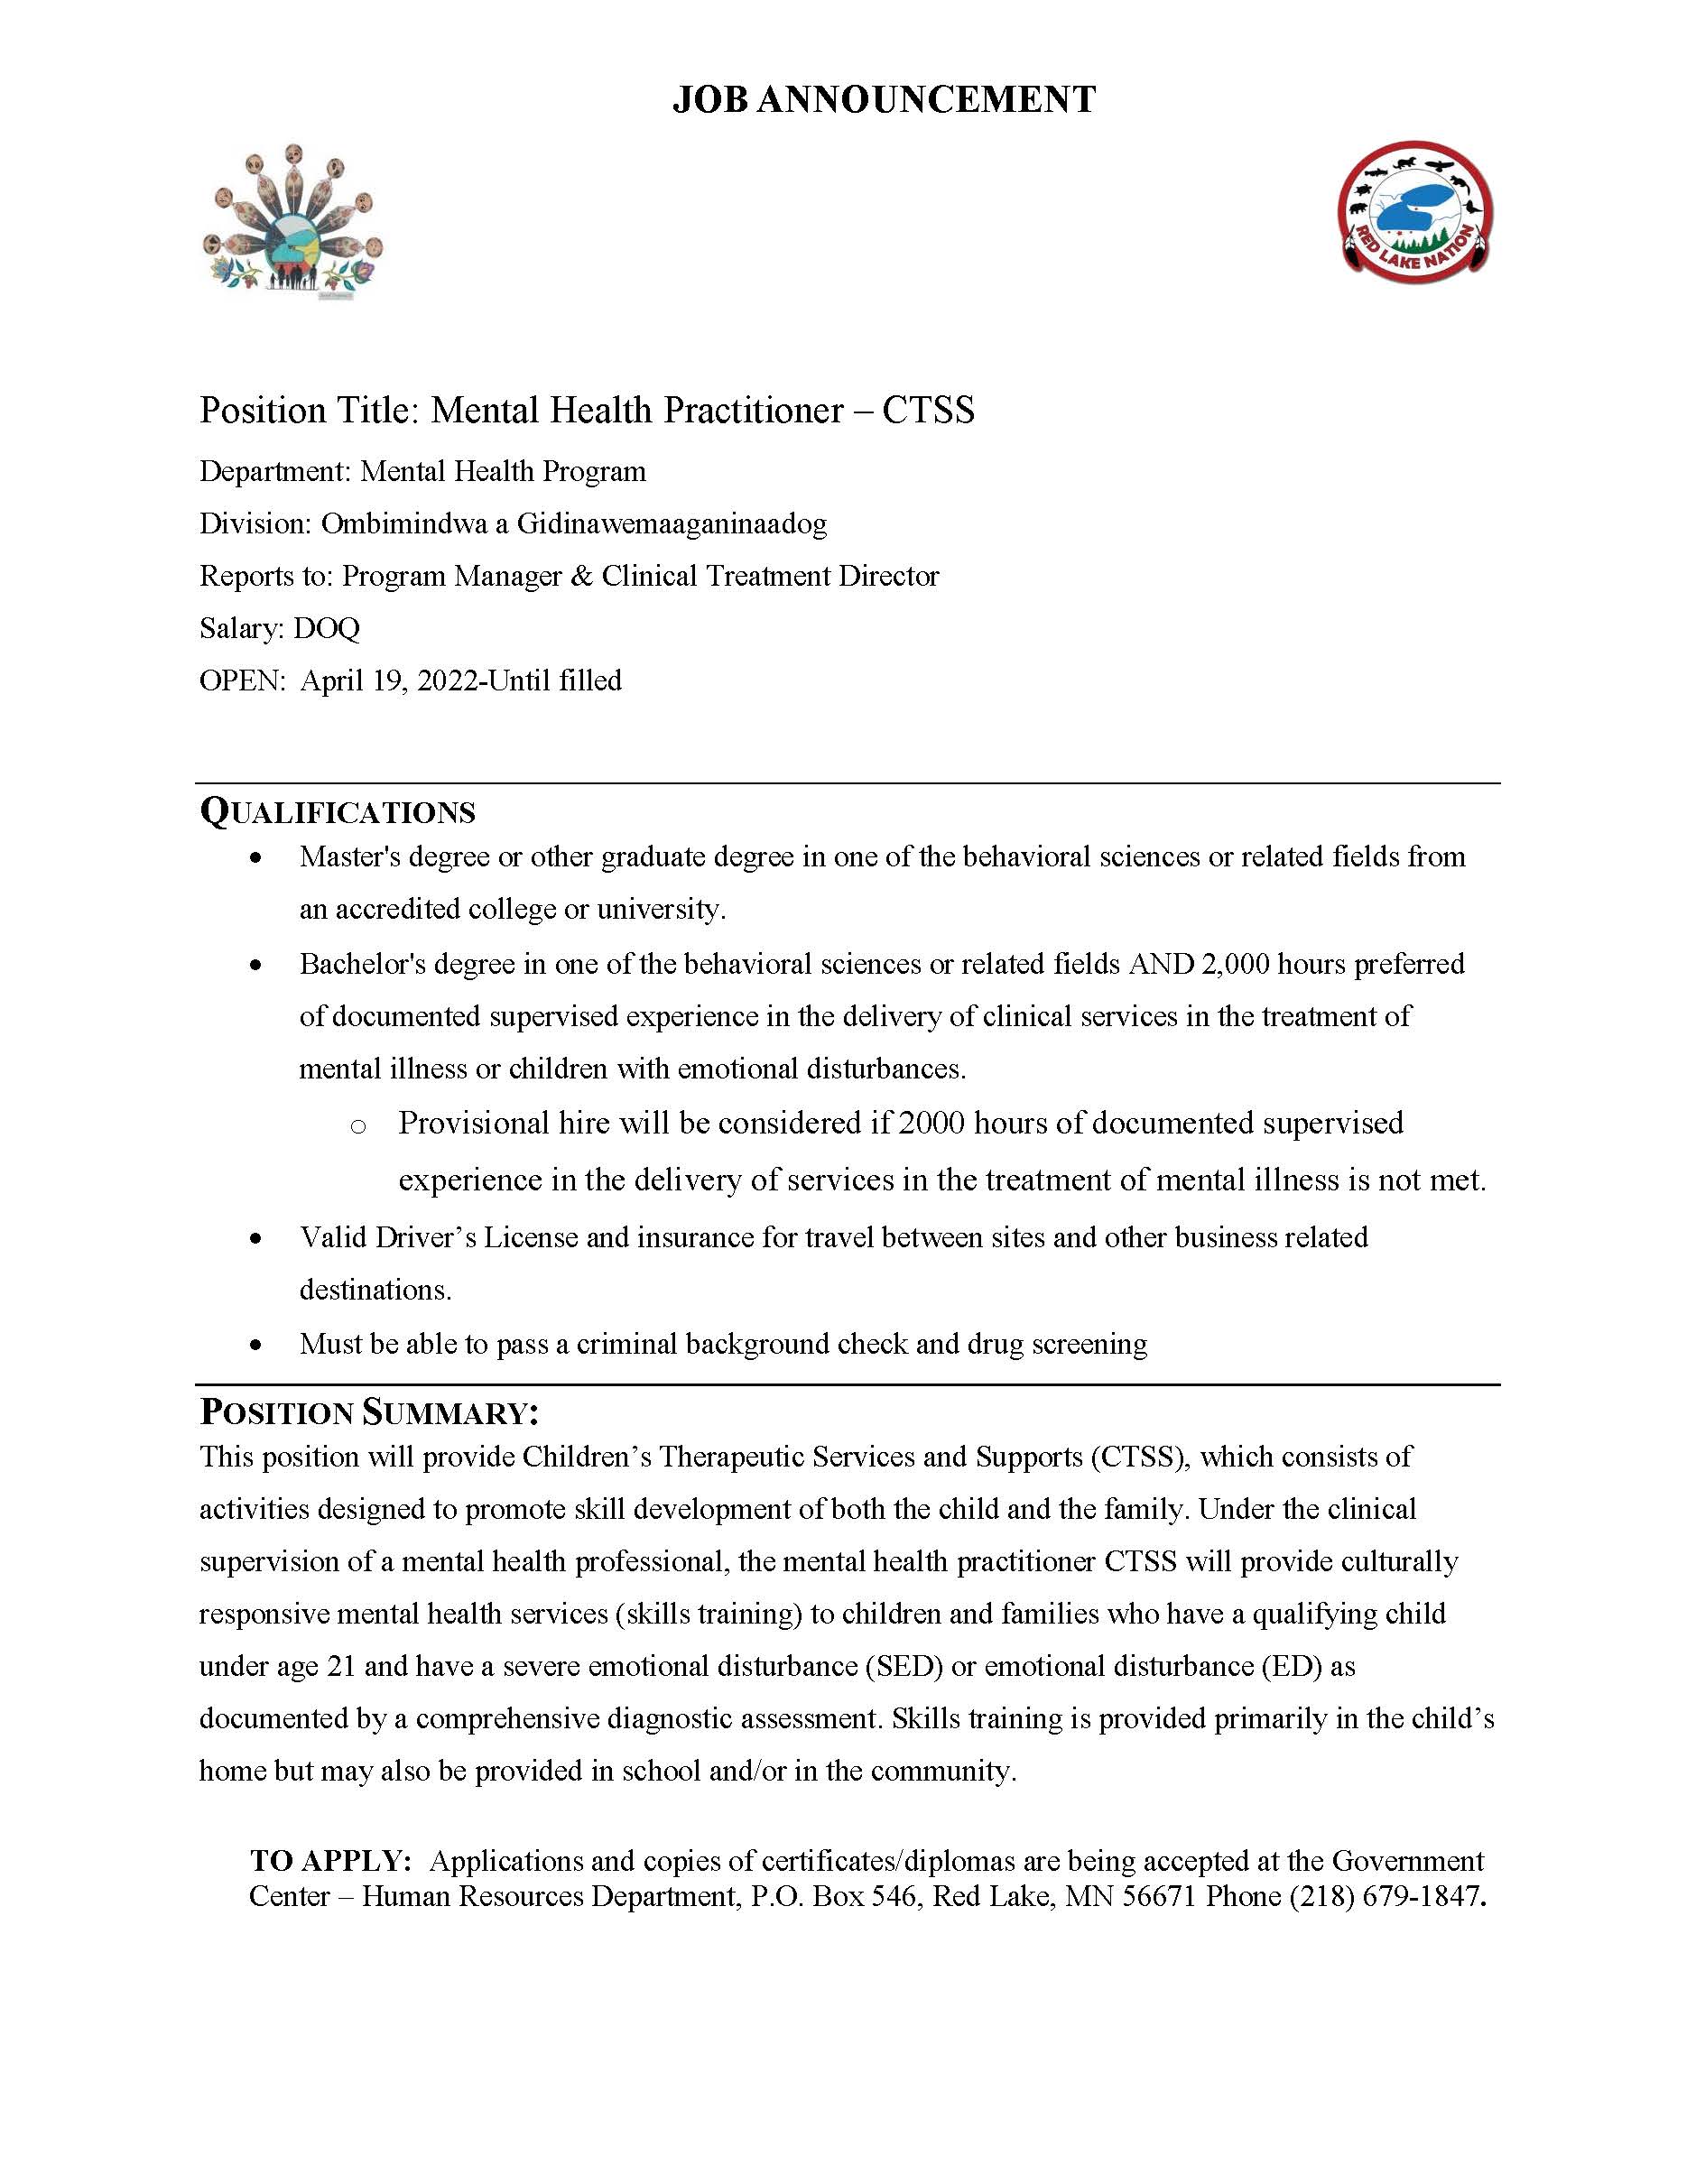 Mental Health Practitioner CTSS-Family Children Services Job Posting 4-19-2022